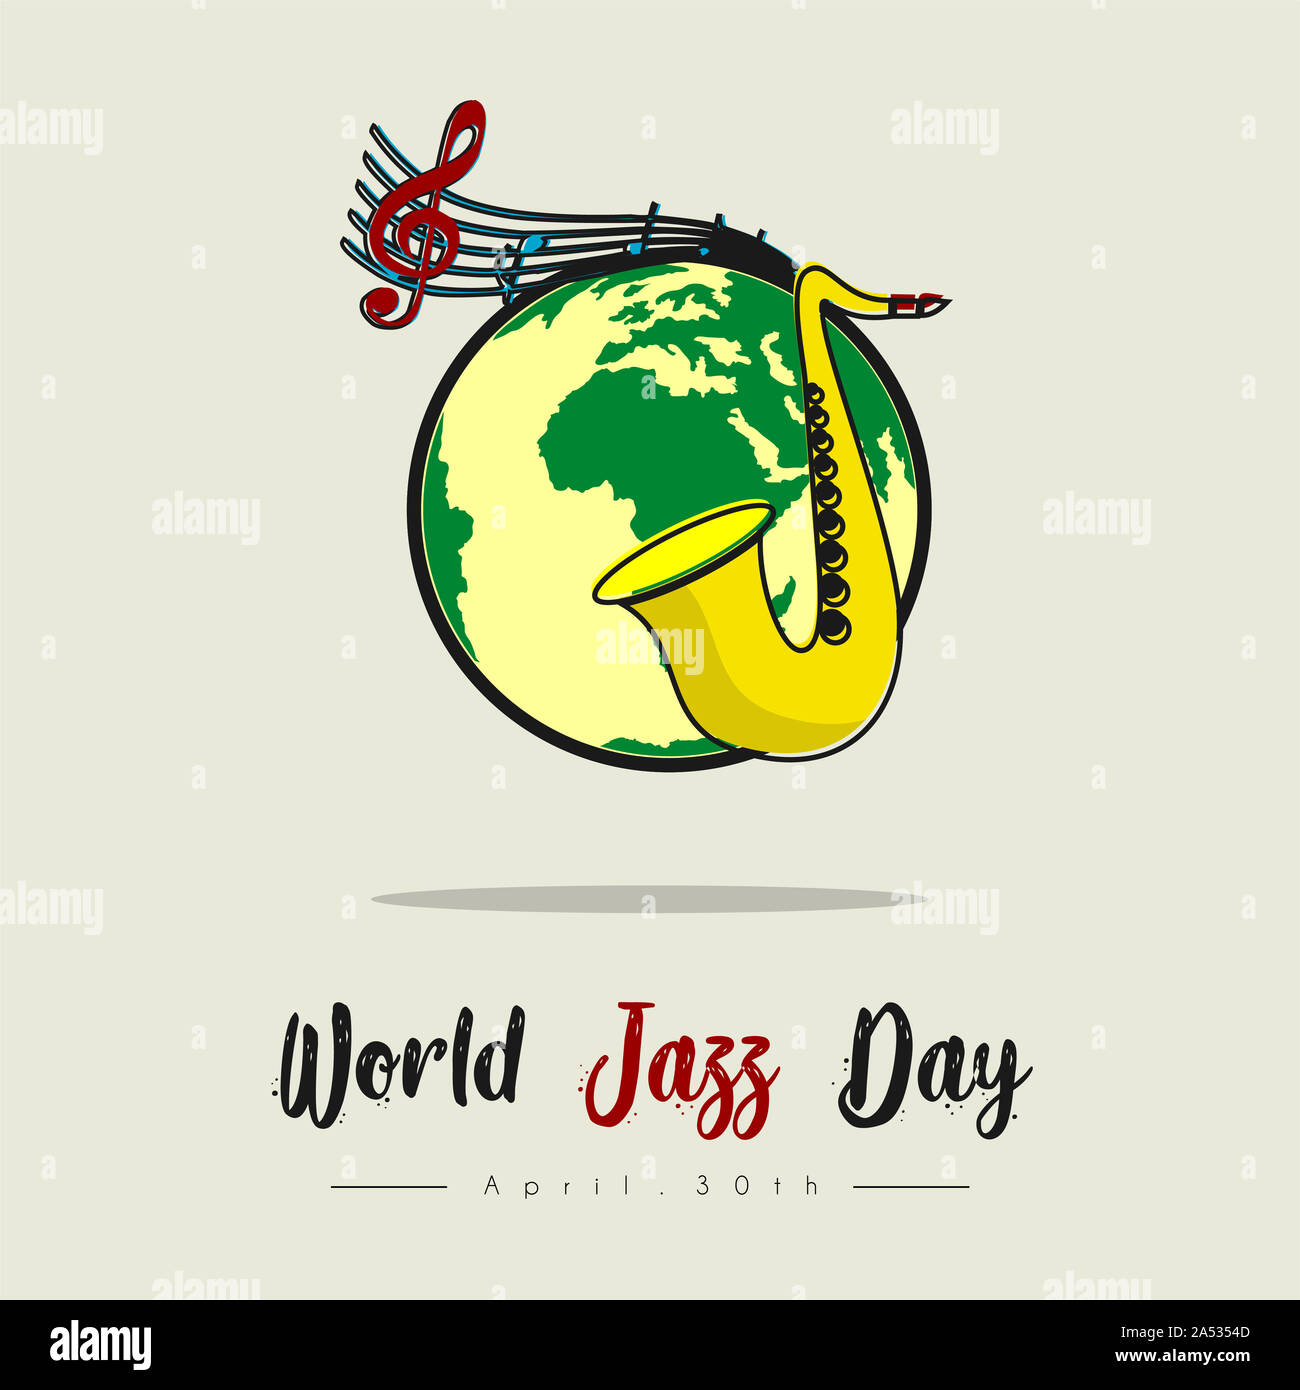 World Jazz Day with Saxophone and World Globe vector cartoon Stock Photo